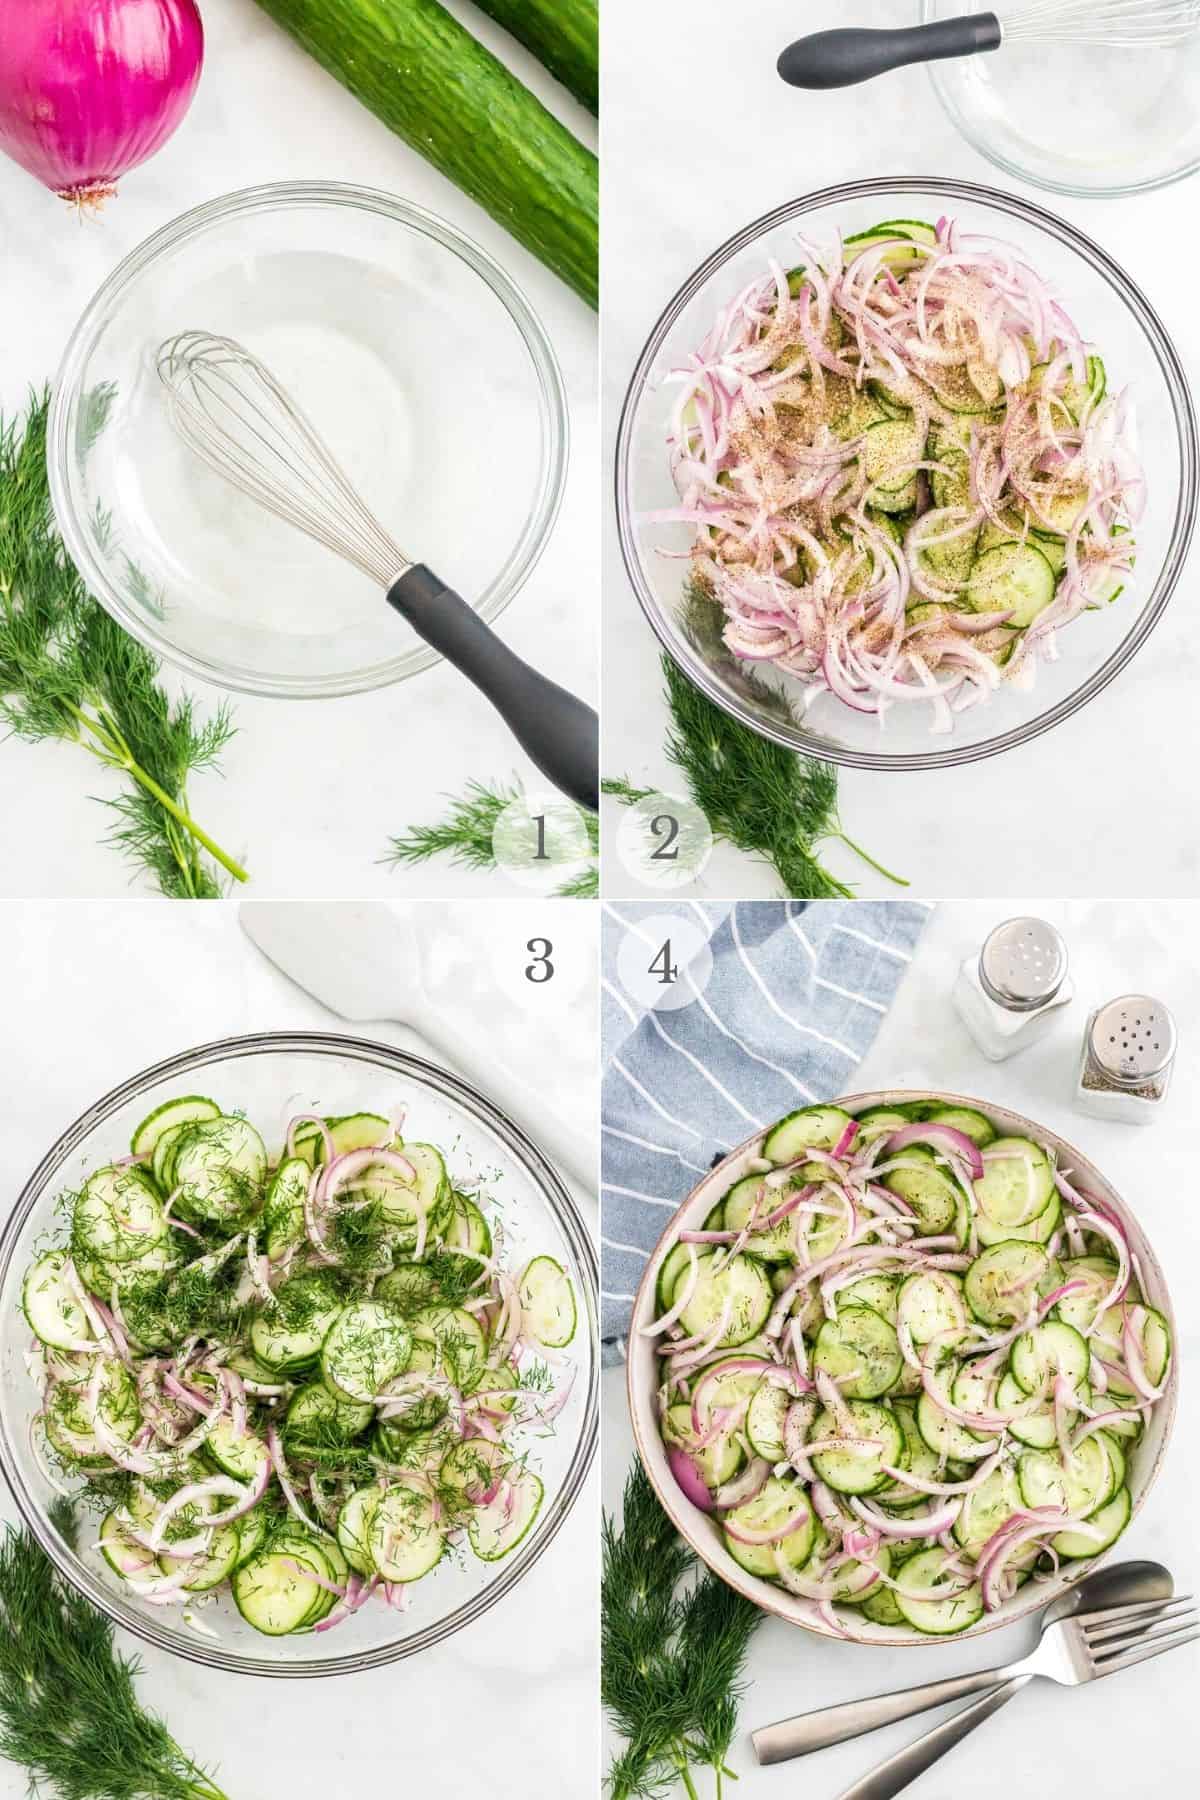 cucumber salad recipe steps 1-4.